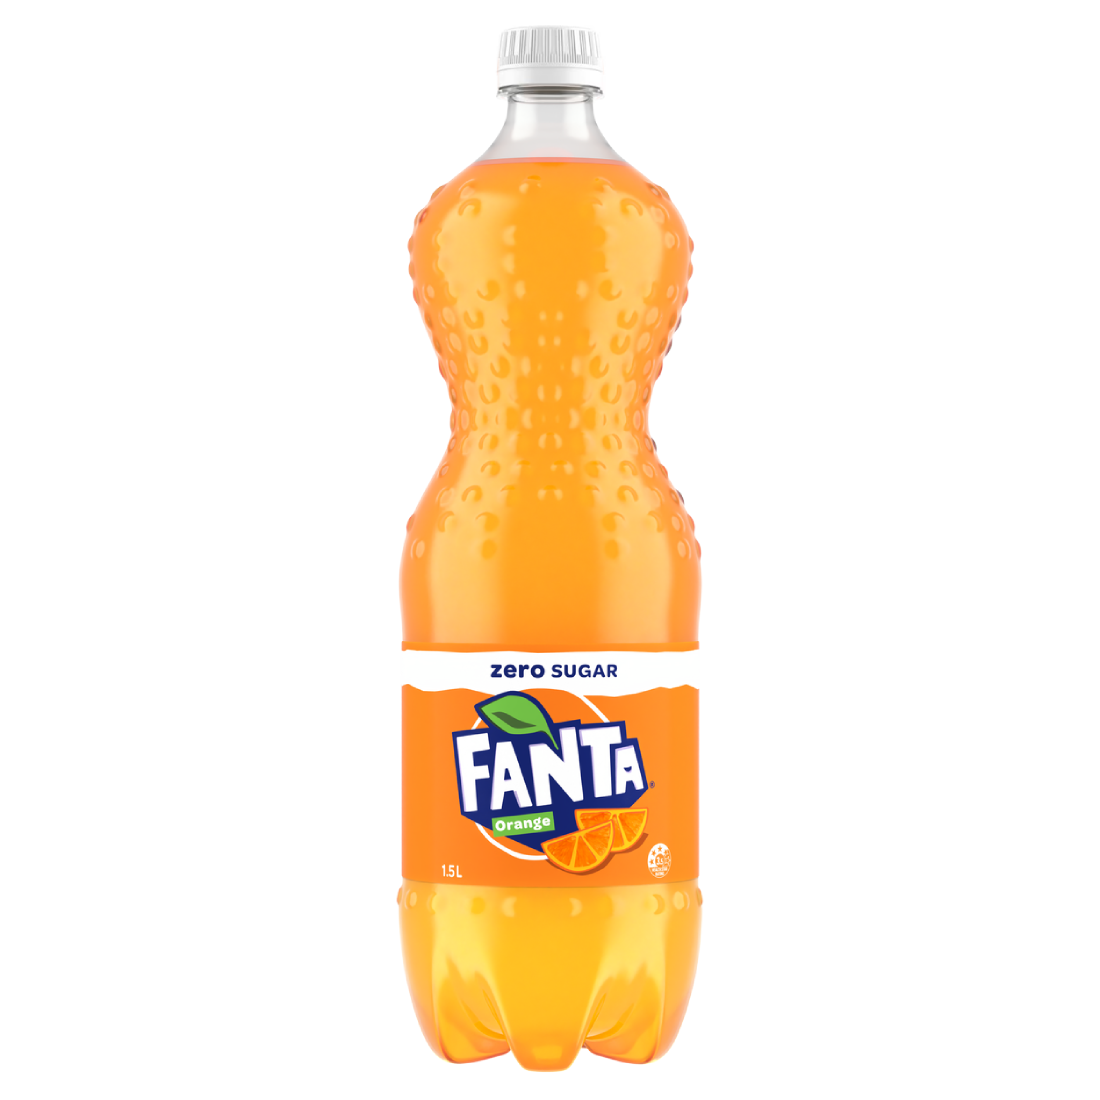 Fanta No Sugar Orange bottle